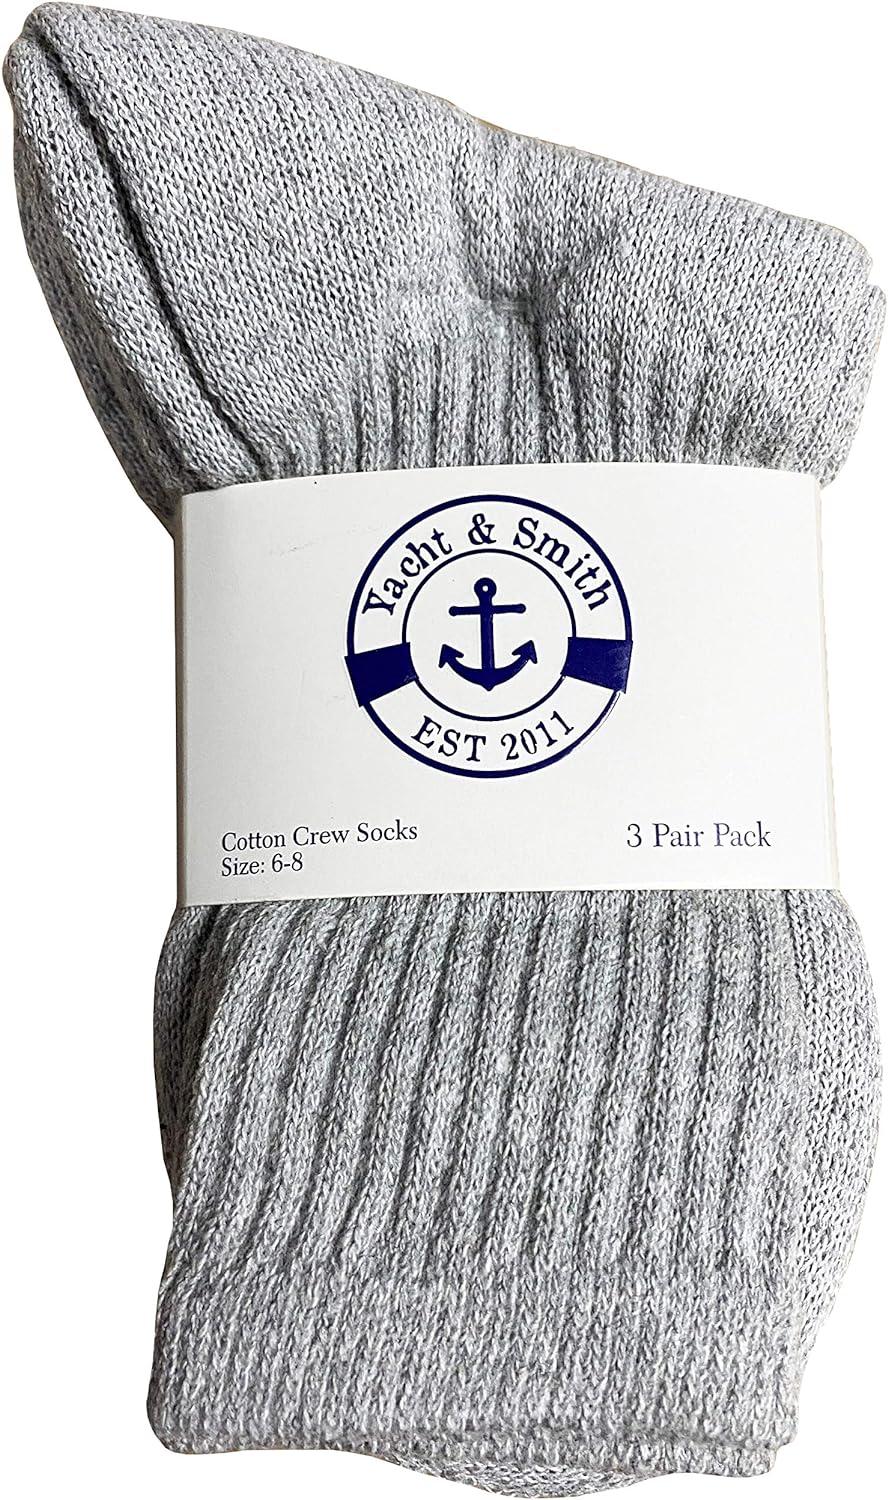 Yacht & Smith SOCKS'NBULK 60 Pairs Wholesale Bulk Sport Cotton Unisex Crew, Ankle, Tube Socks, Men Woman Children